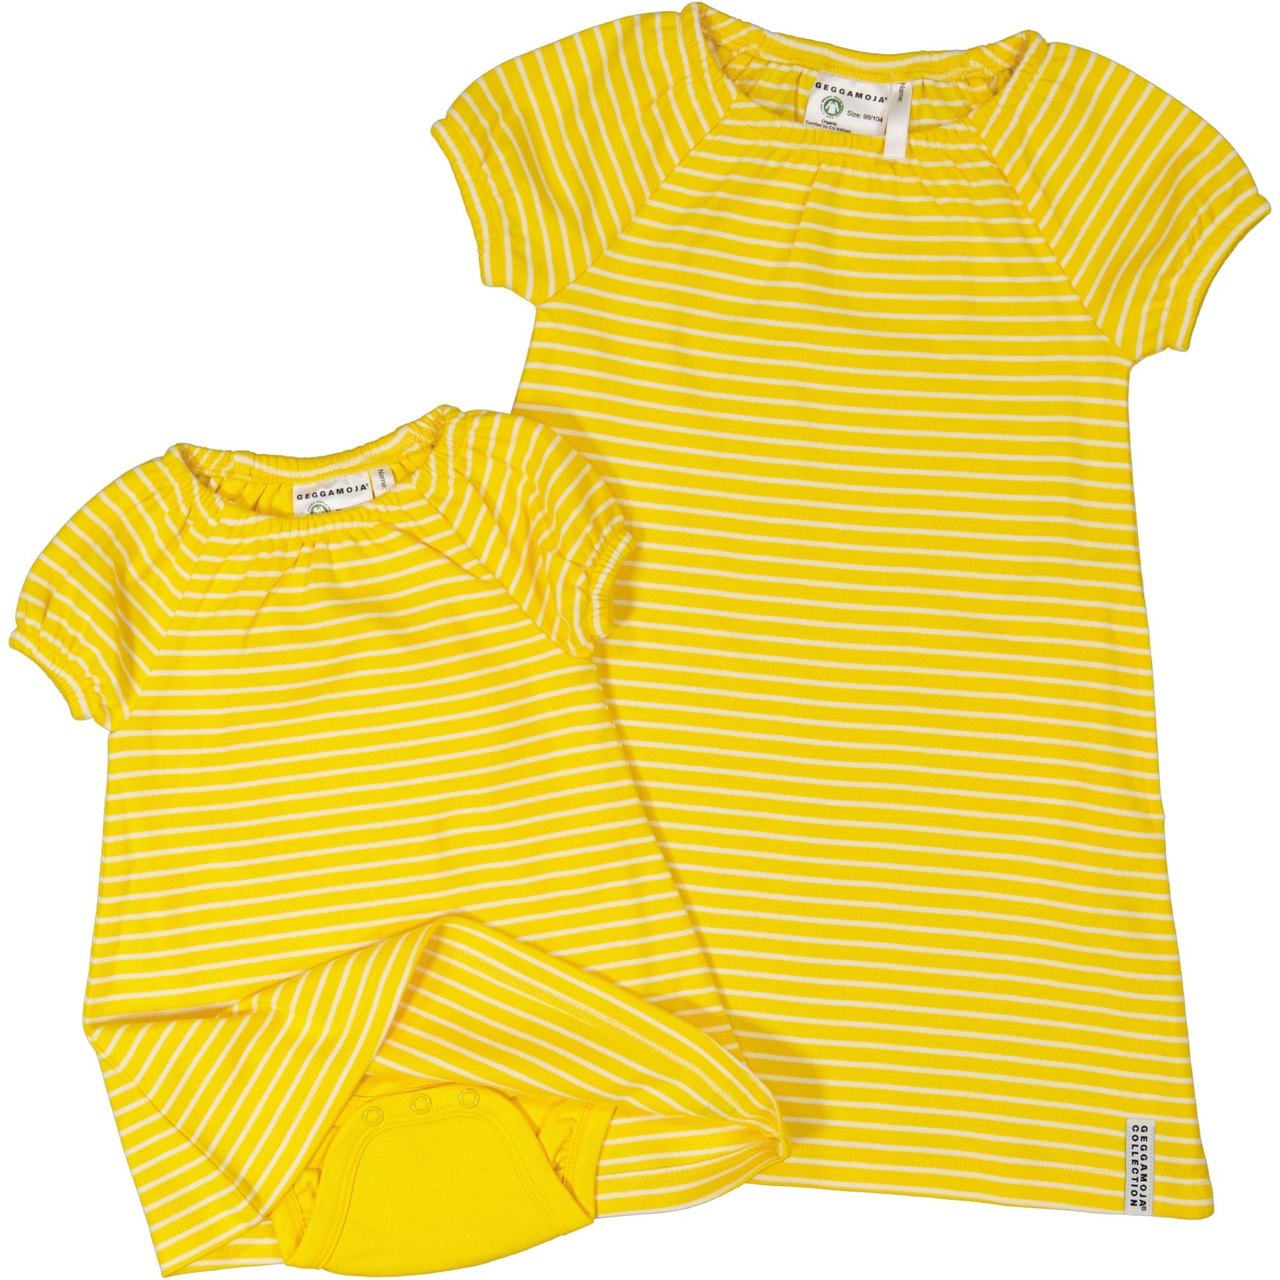 Singoalla dress Yellow/white  146/152